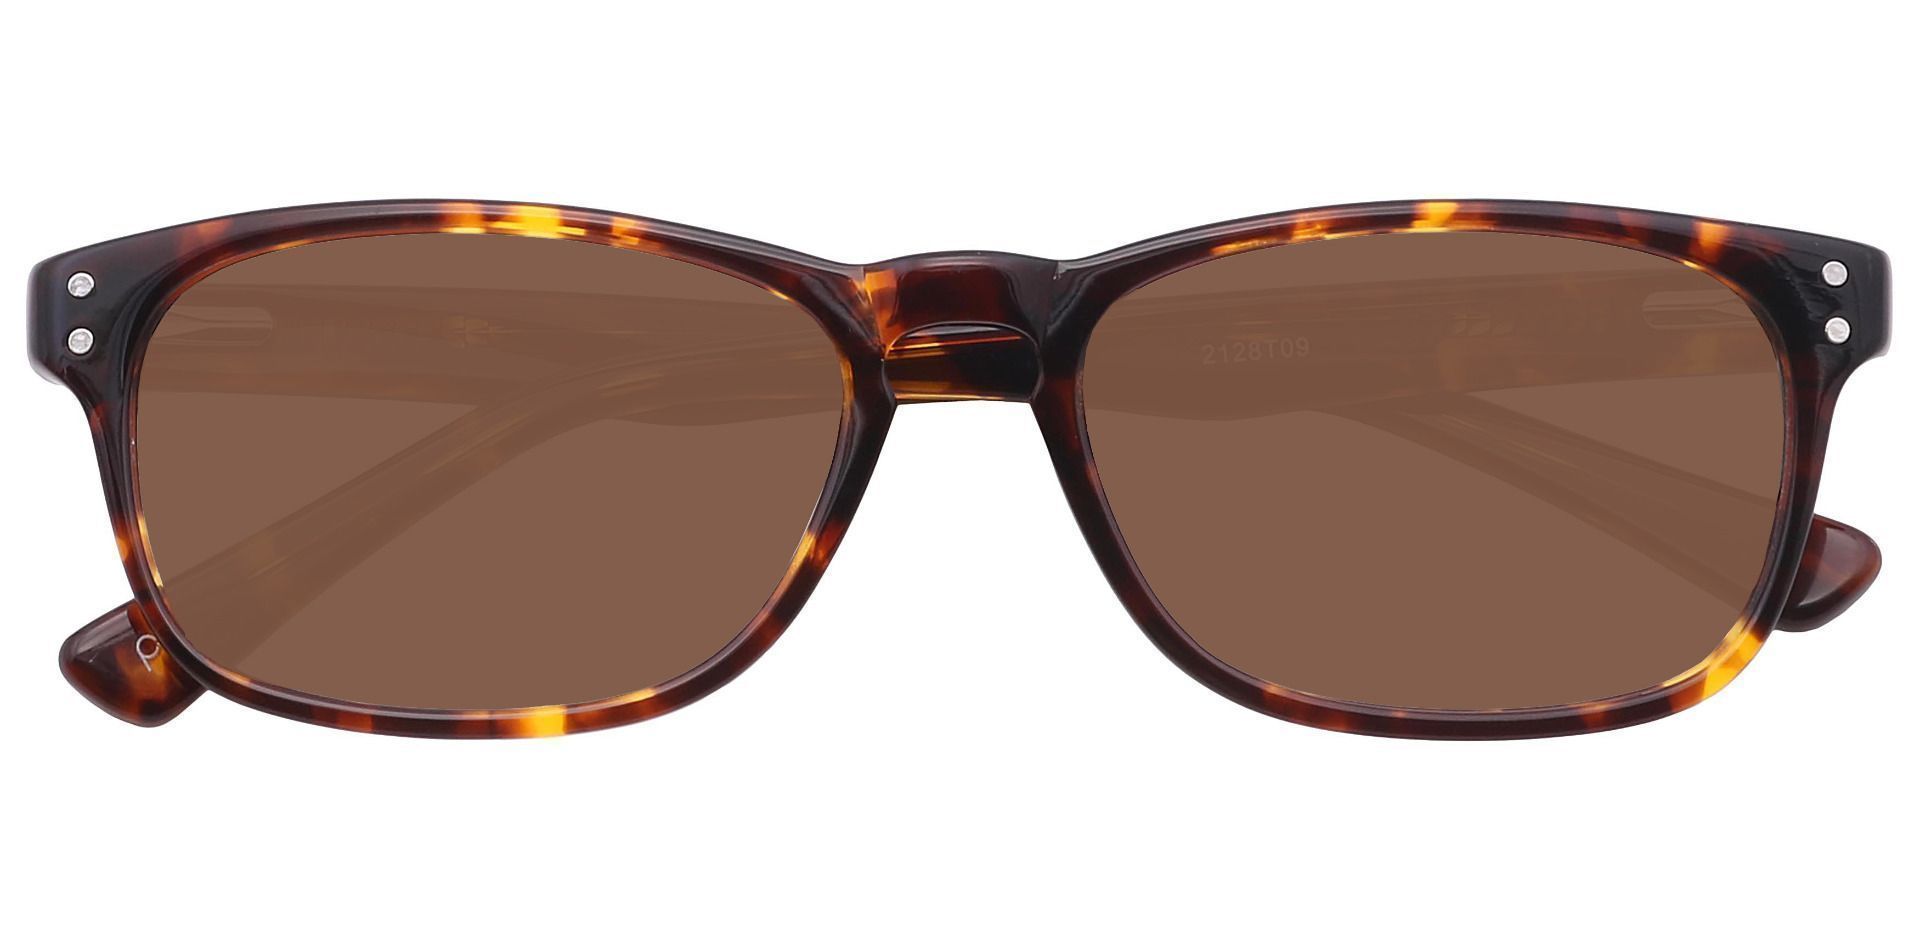 Morris Rectangle Non-Rx Sunglasses - Tortoise Frame With Brown Lenses